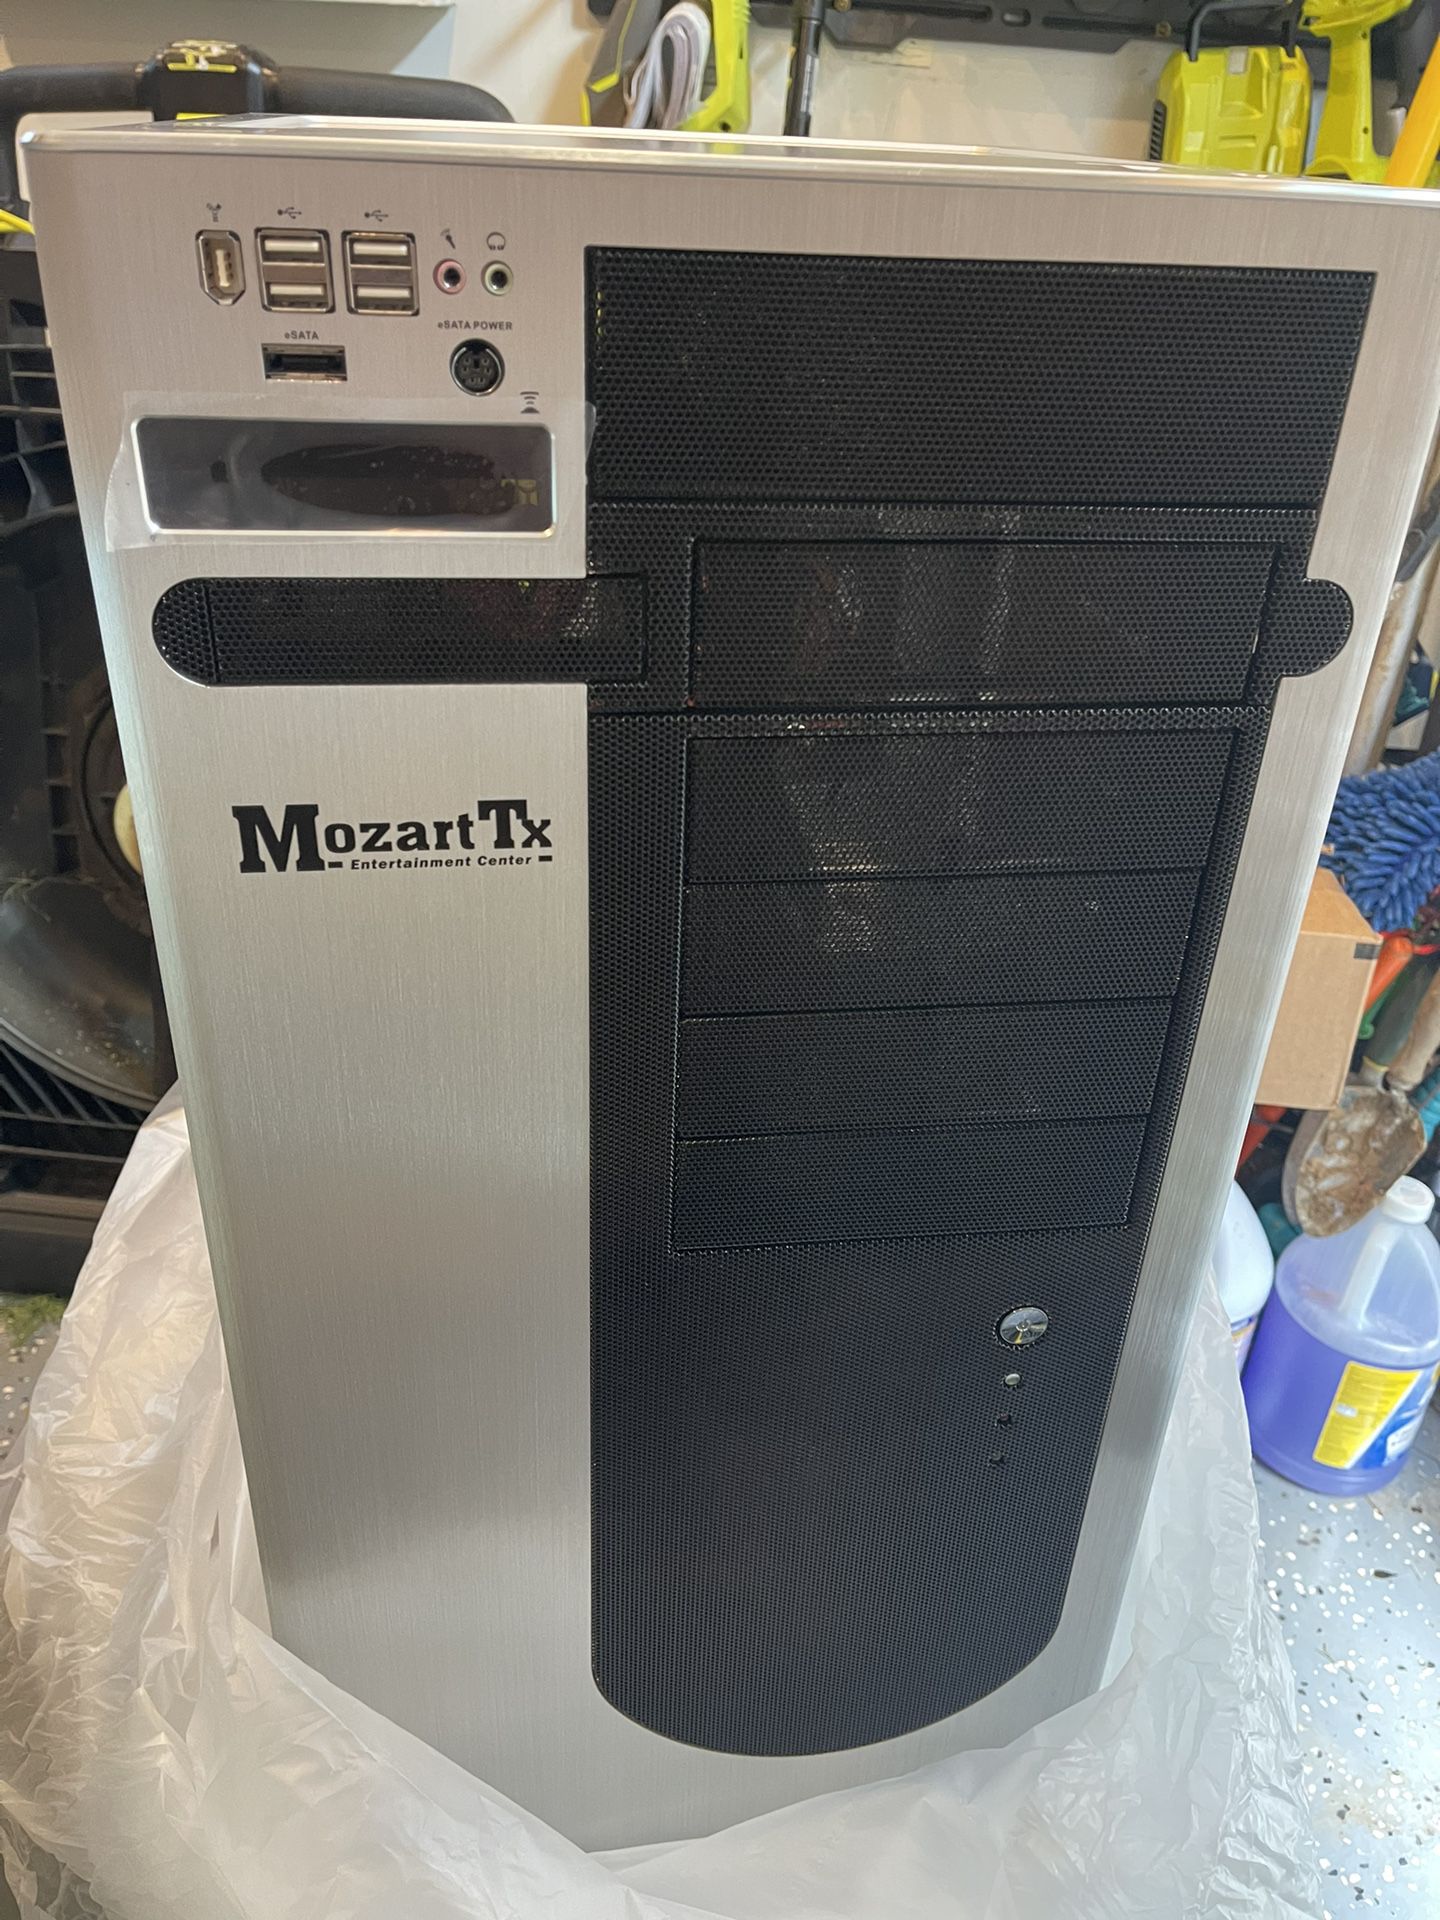 Thermaltake Mozart TX dual motherboard Entertainment center Computer Case. HUGE AIRFLOW 